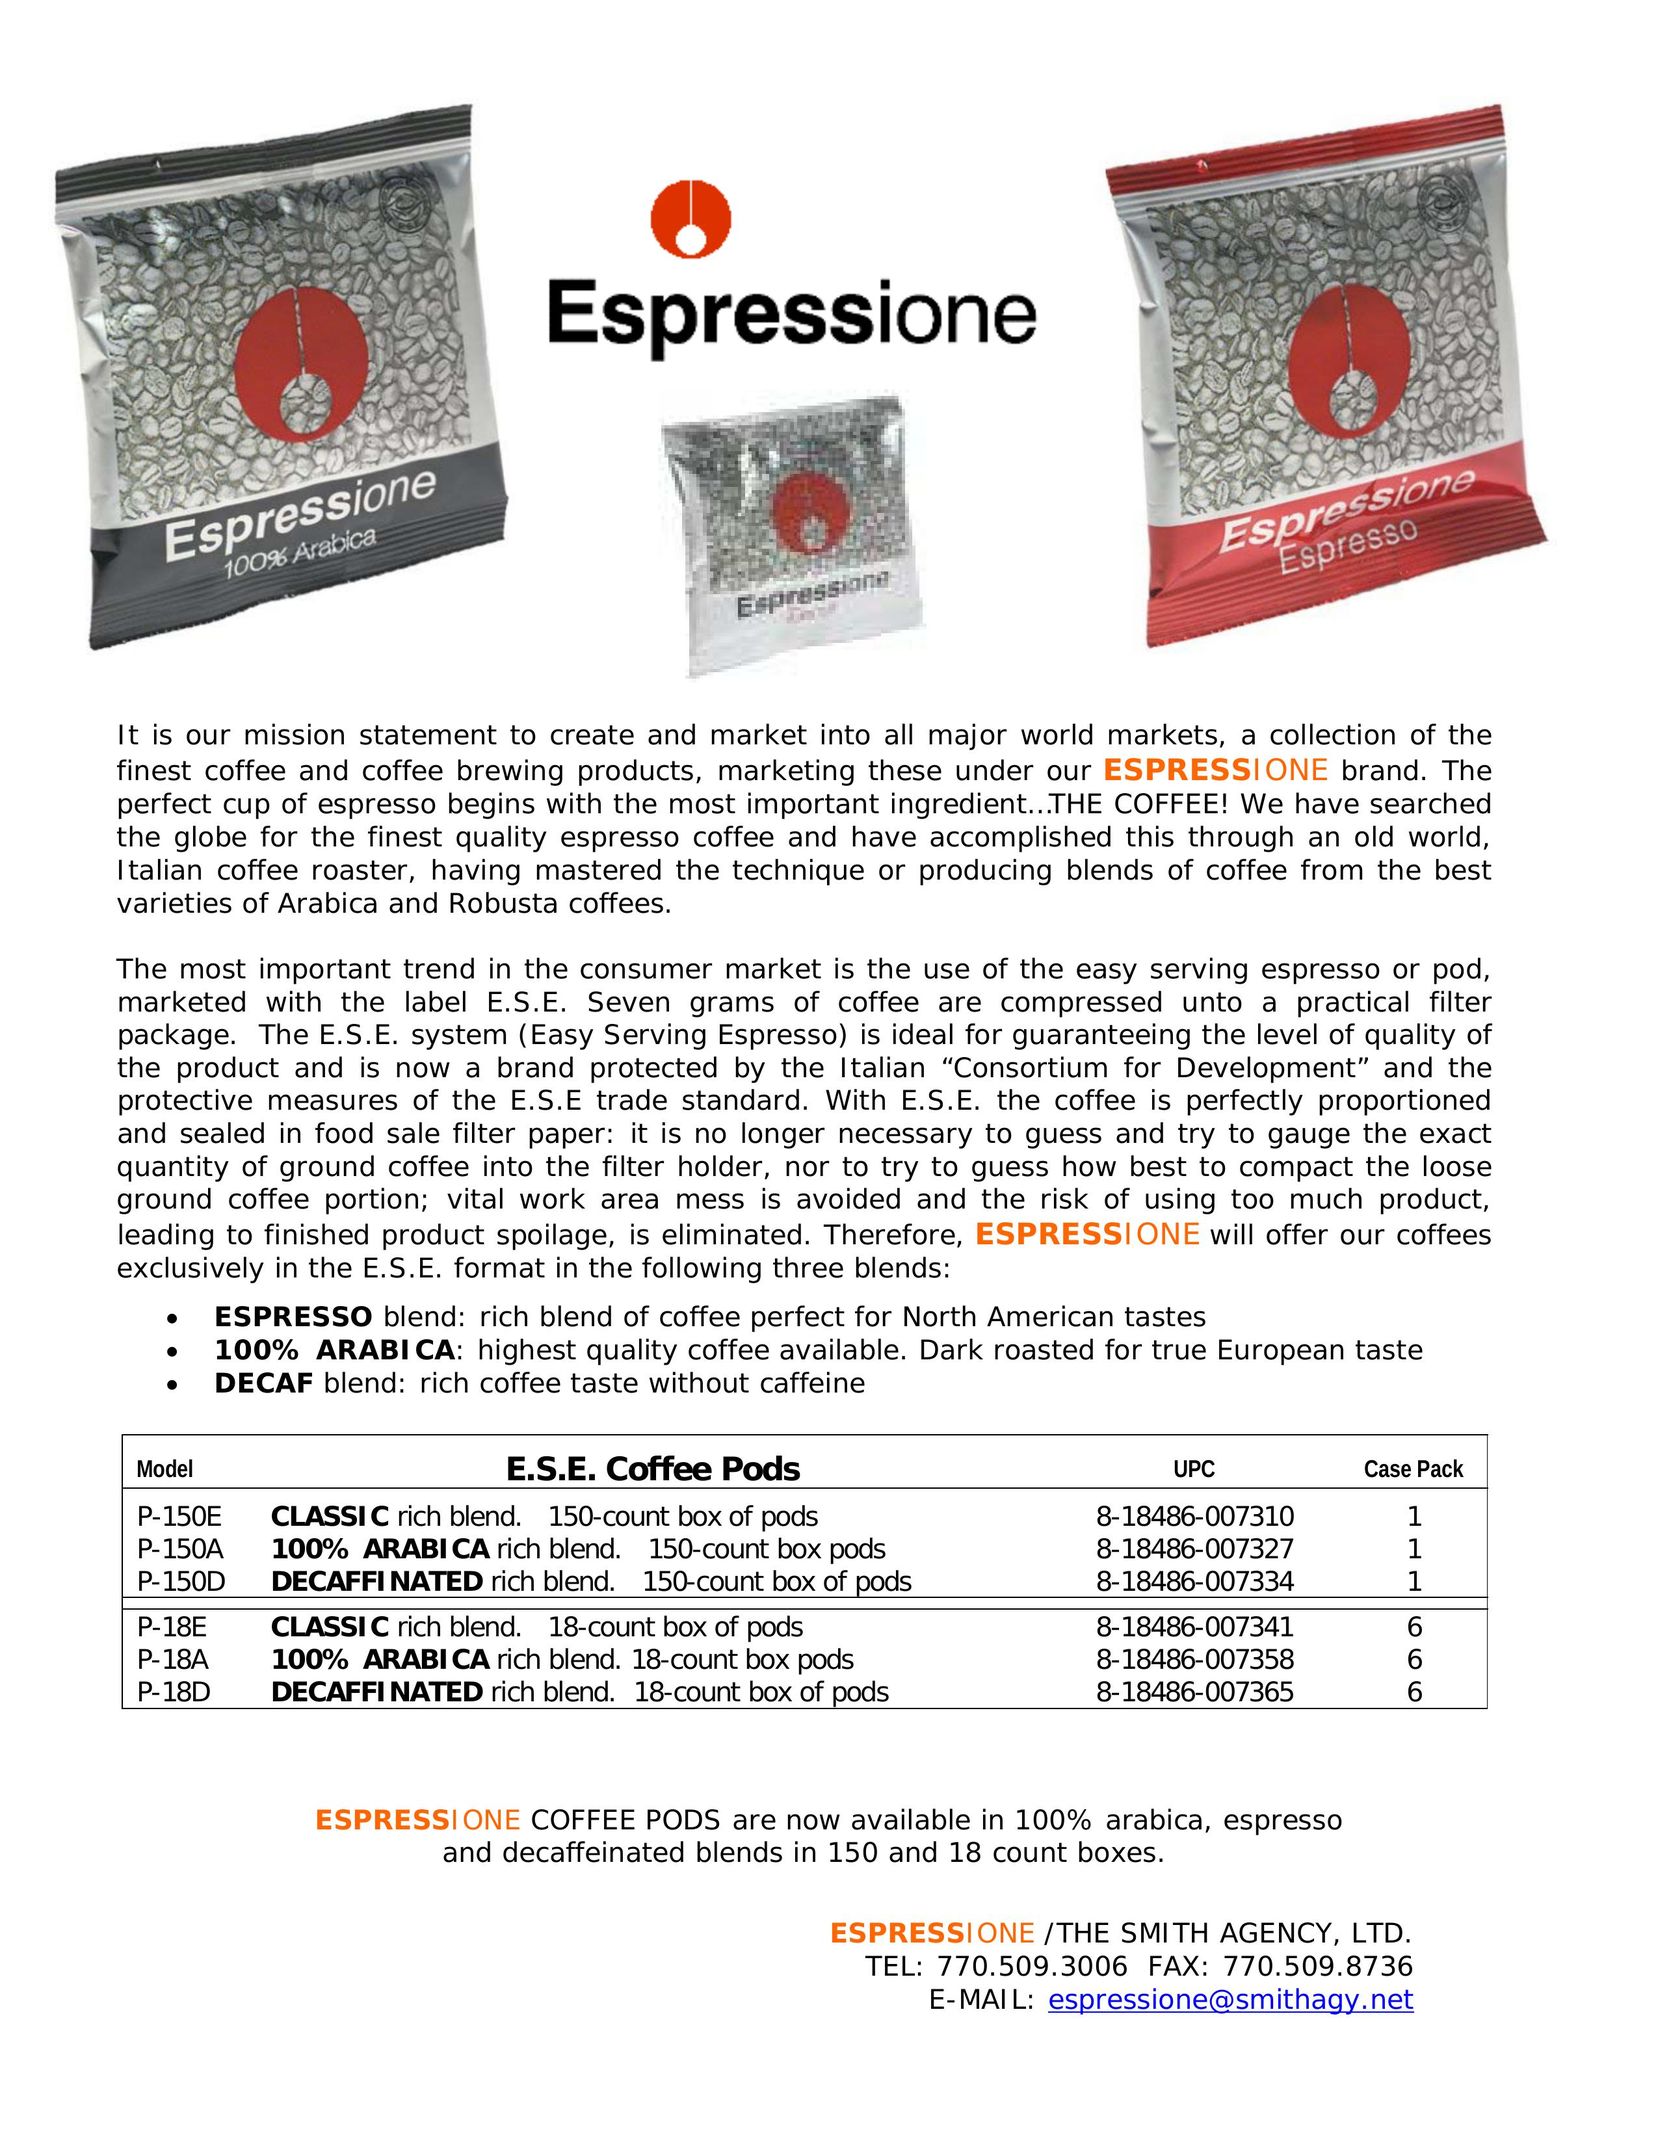 THE SMITH AGENCY P-150D Espresso Maker User Manual